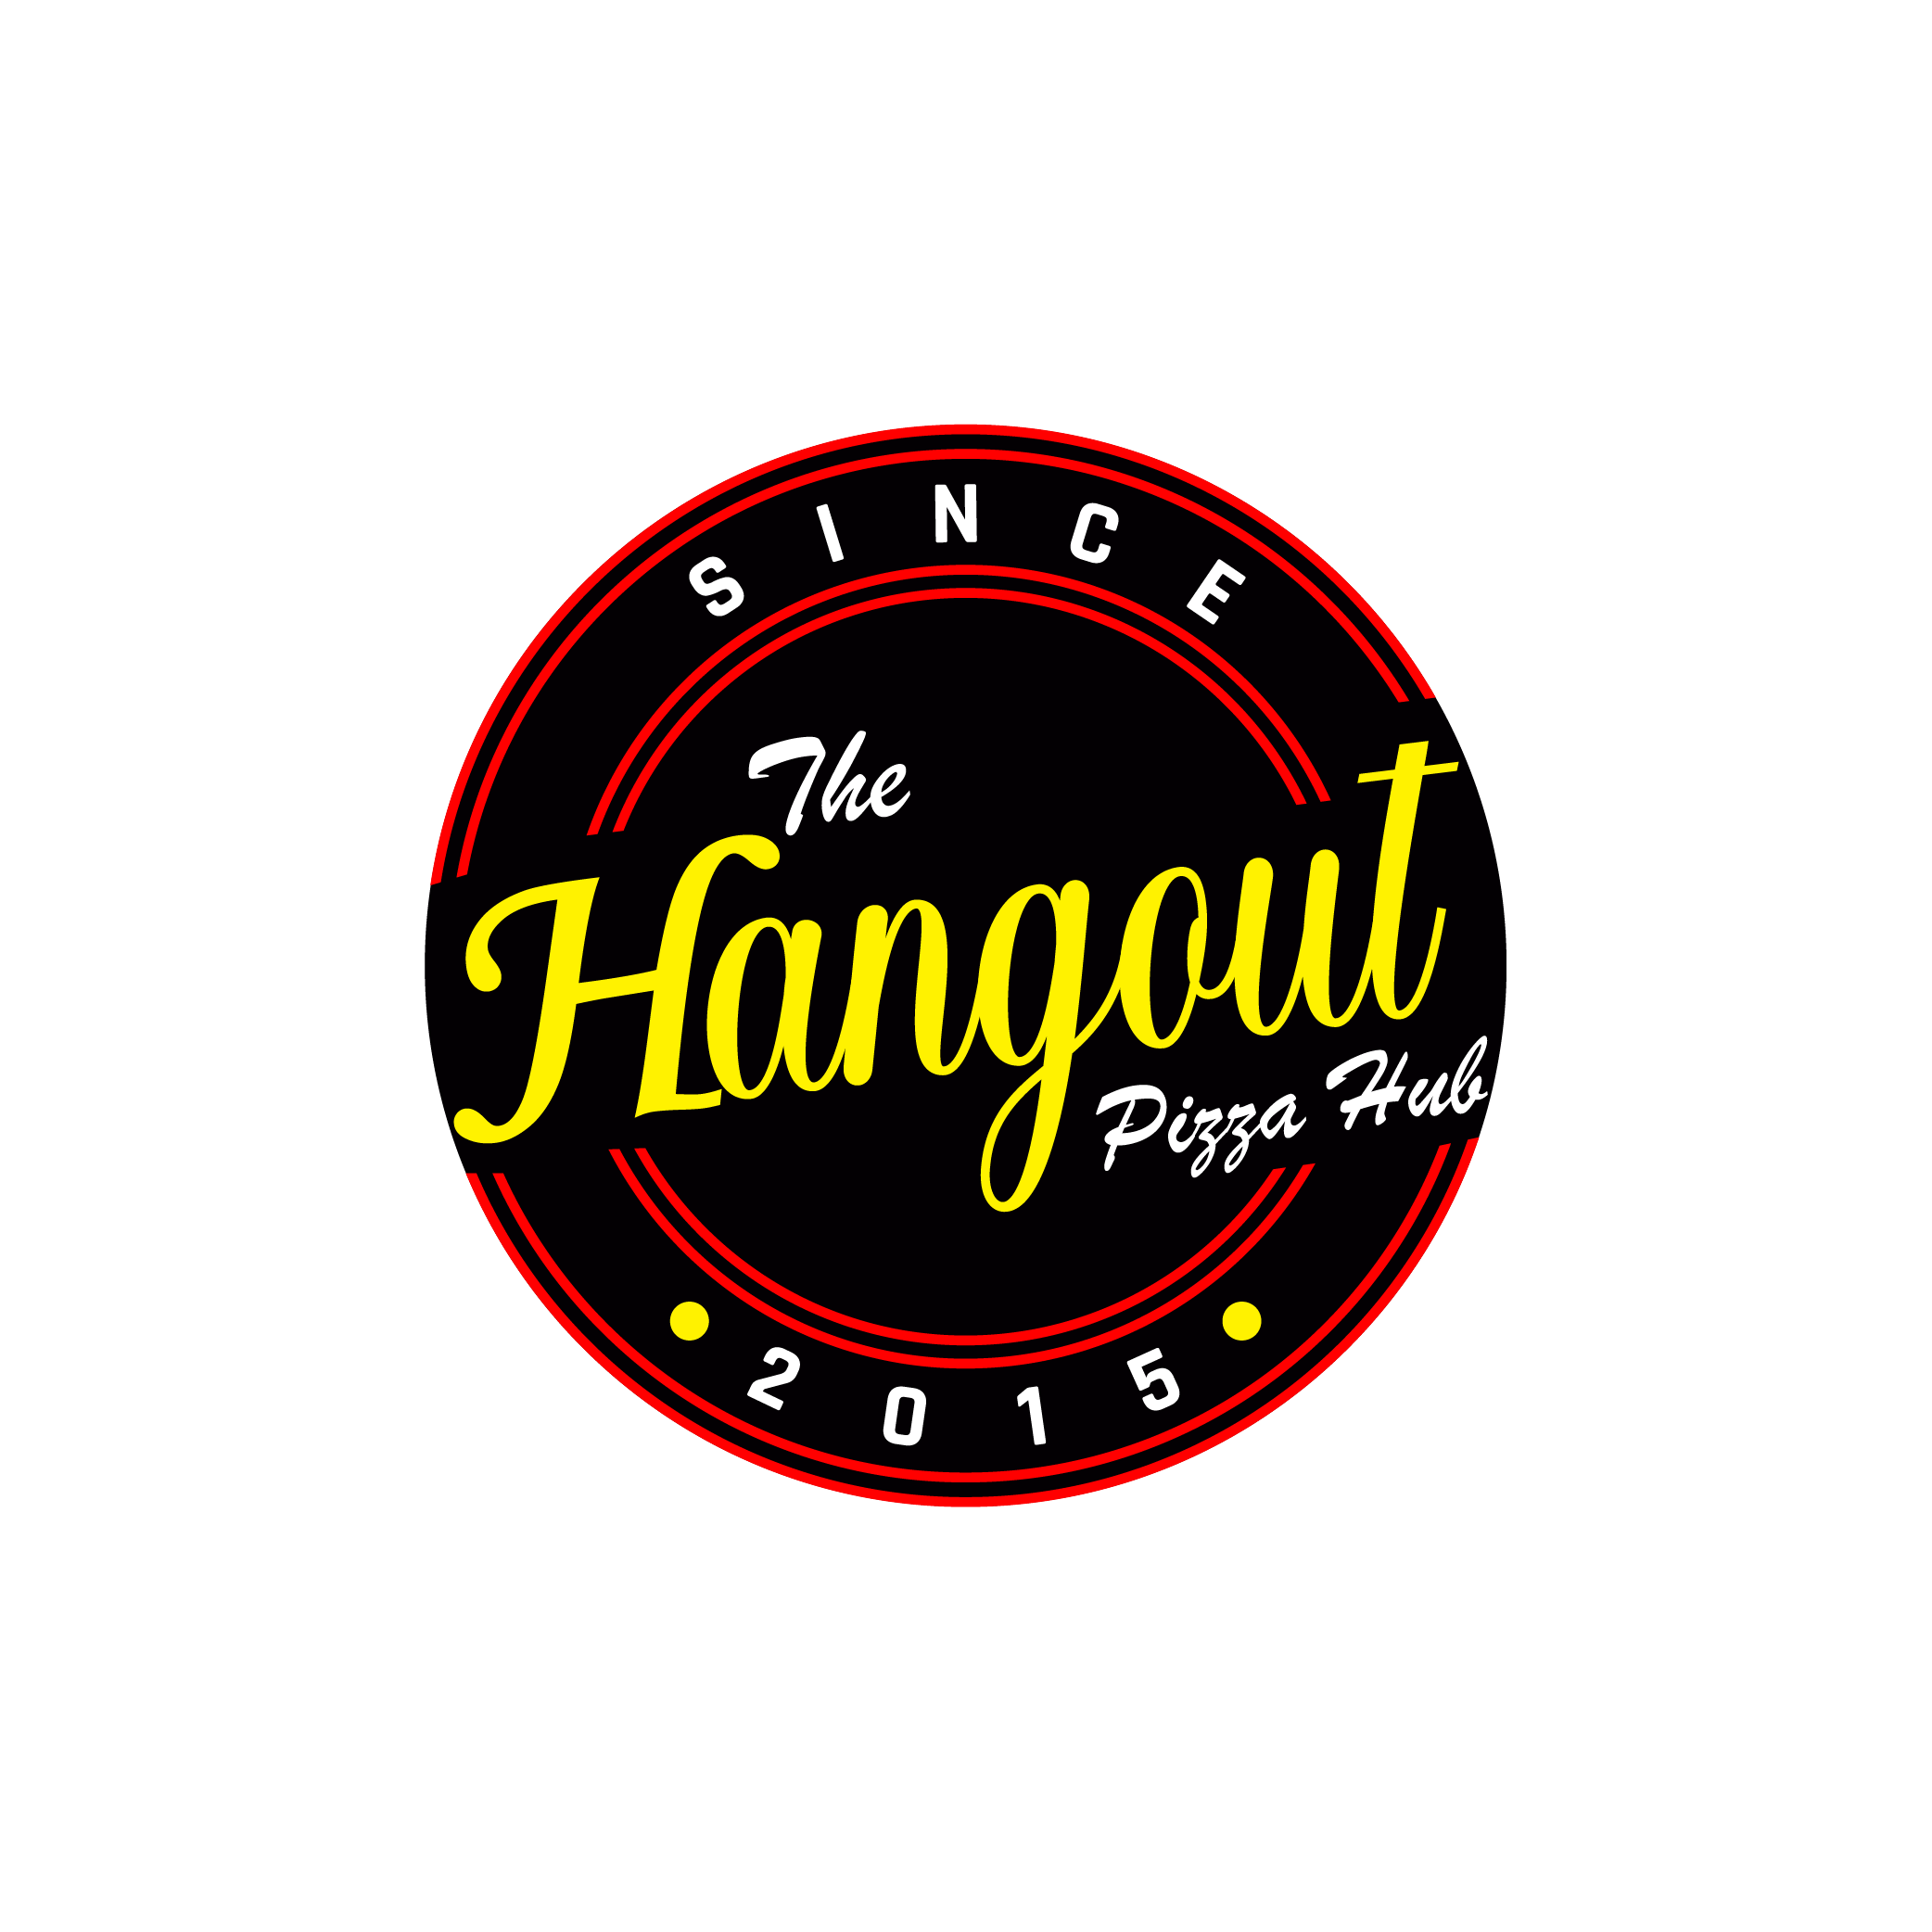 the hangout pizza hub logo